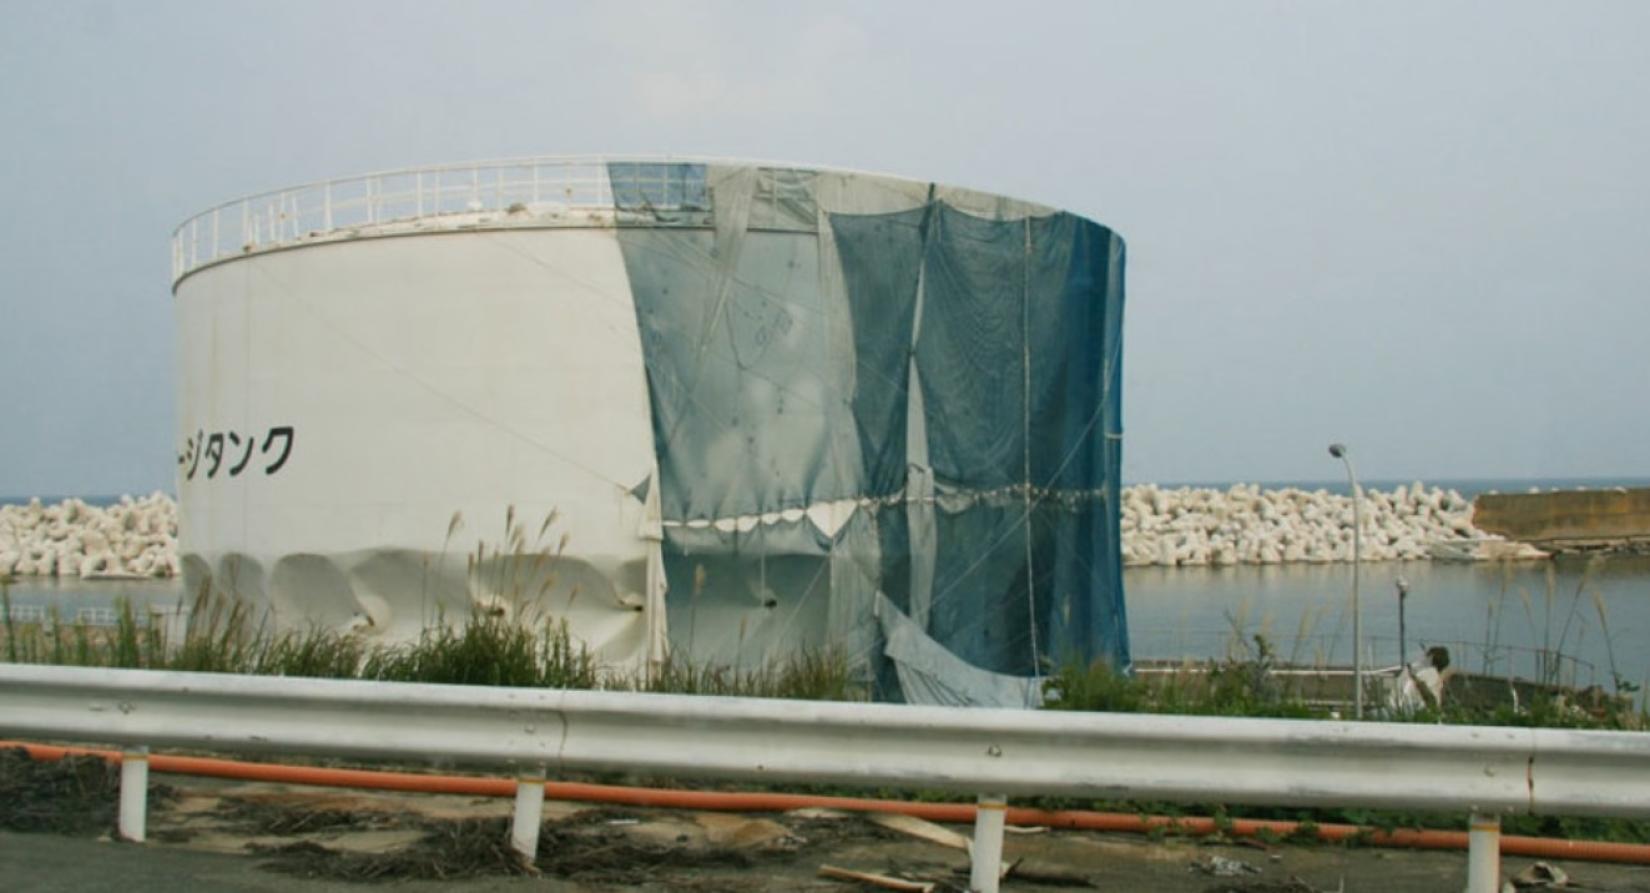 Tanque danificado em Fukushima Daiichi.